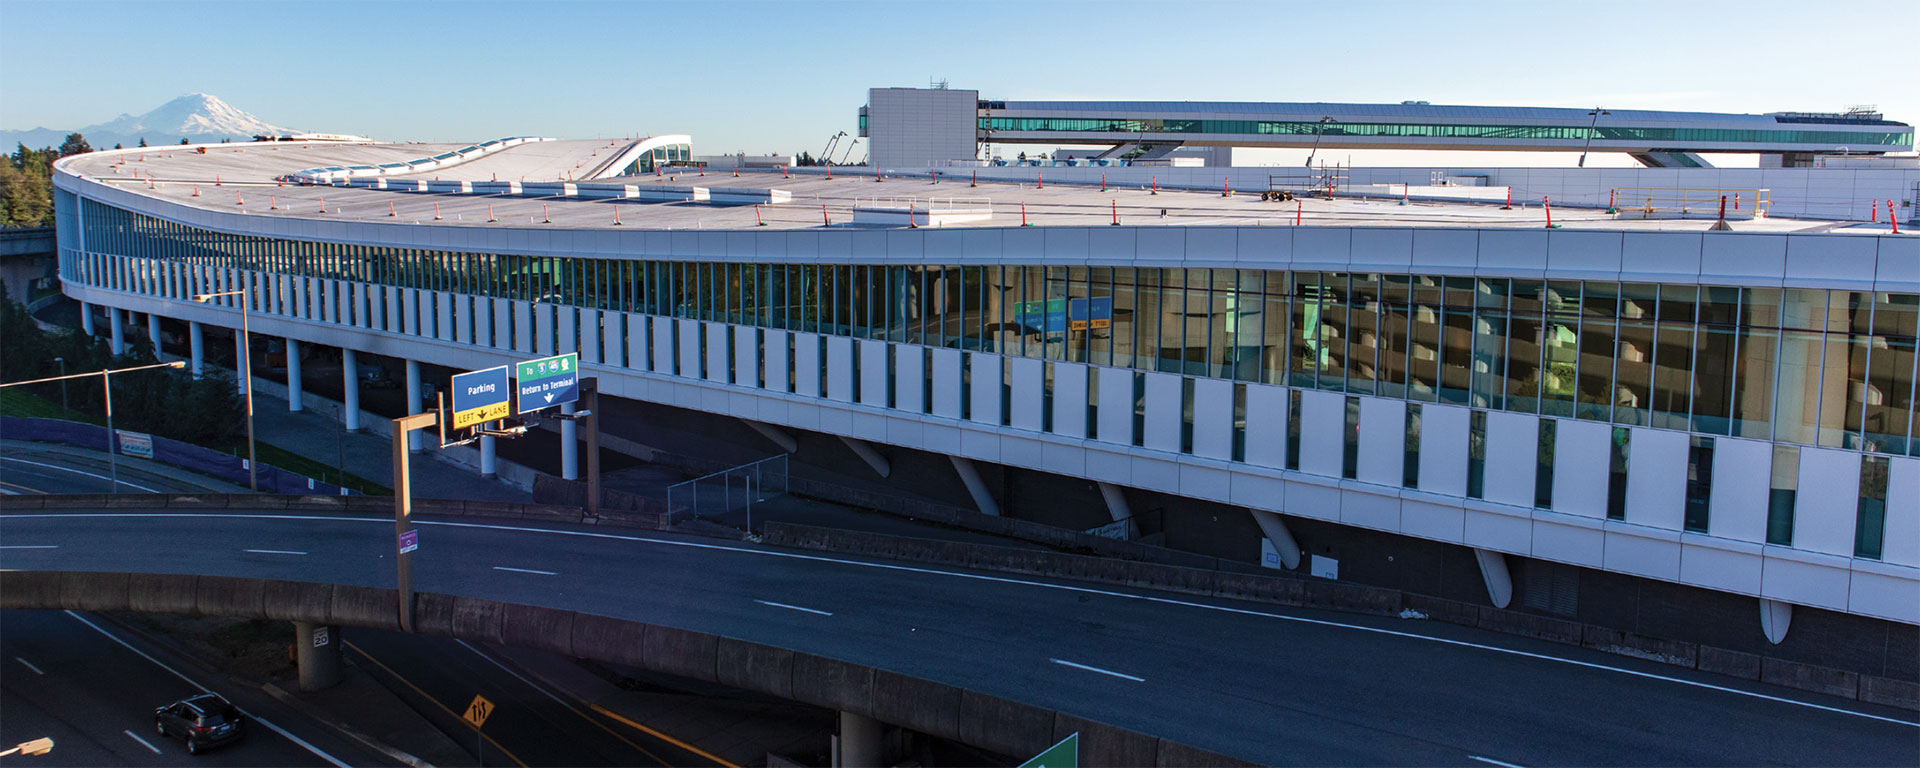 Seattle-Tacoma International Airport | GLOBALCOM.IP Mass Communication System Case Study